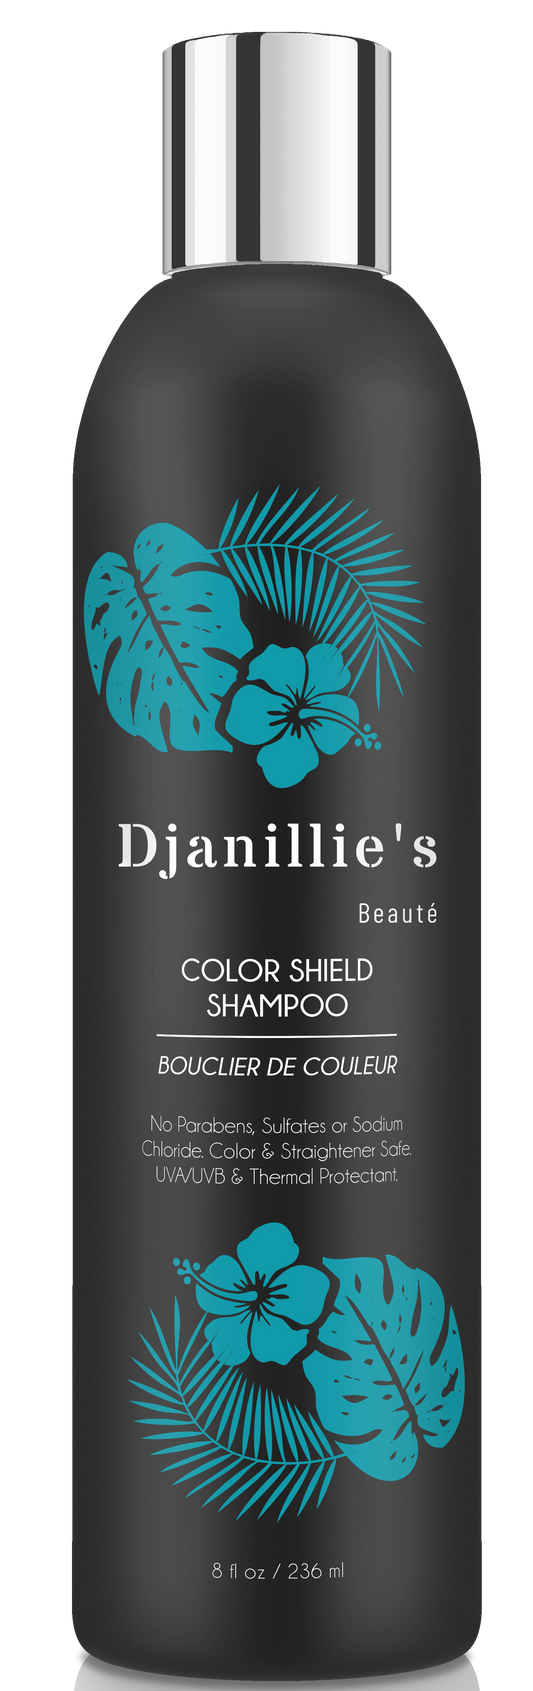 Color Shield Shampoo - Djanillie's Beauté